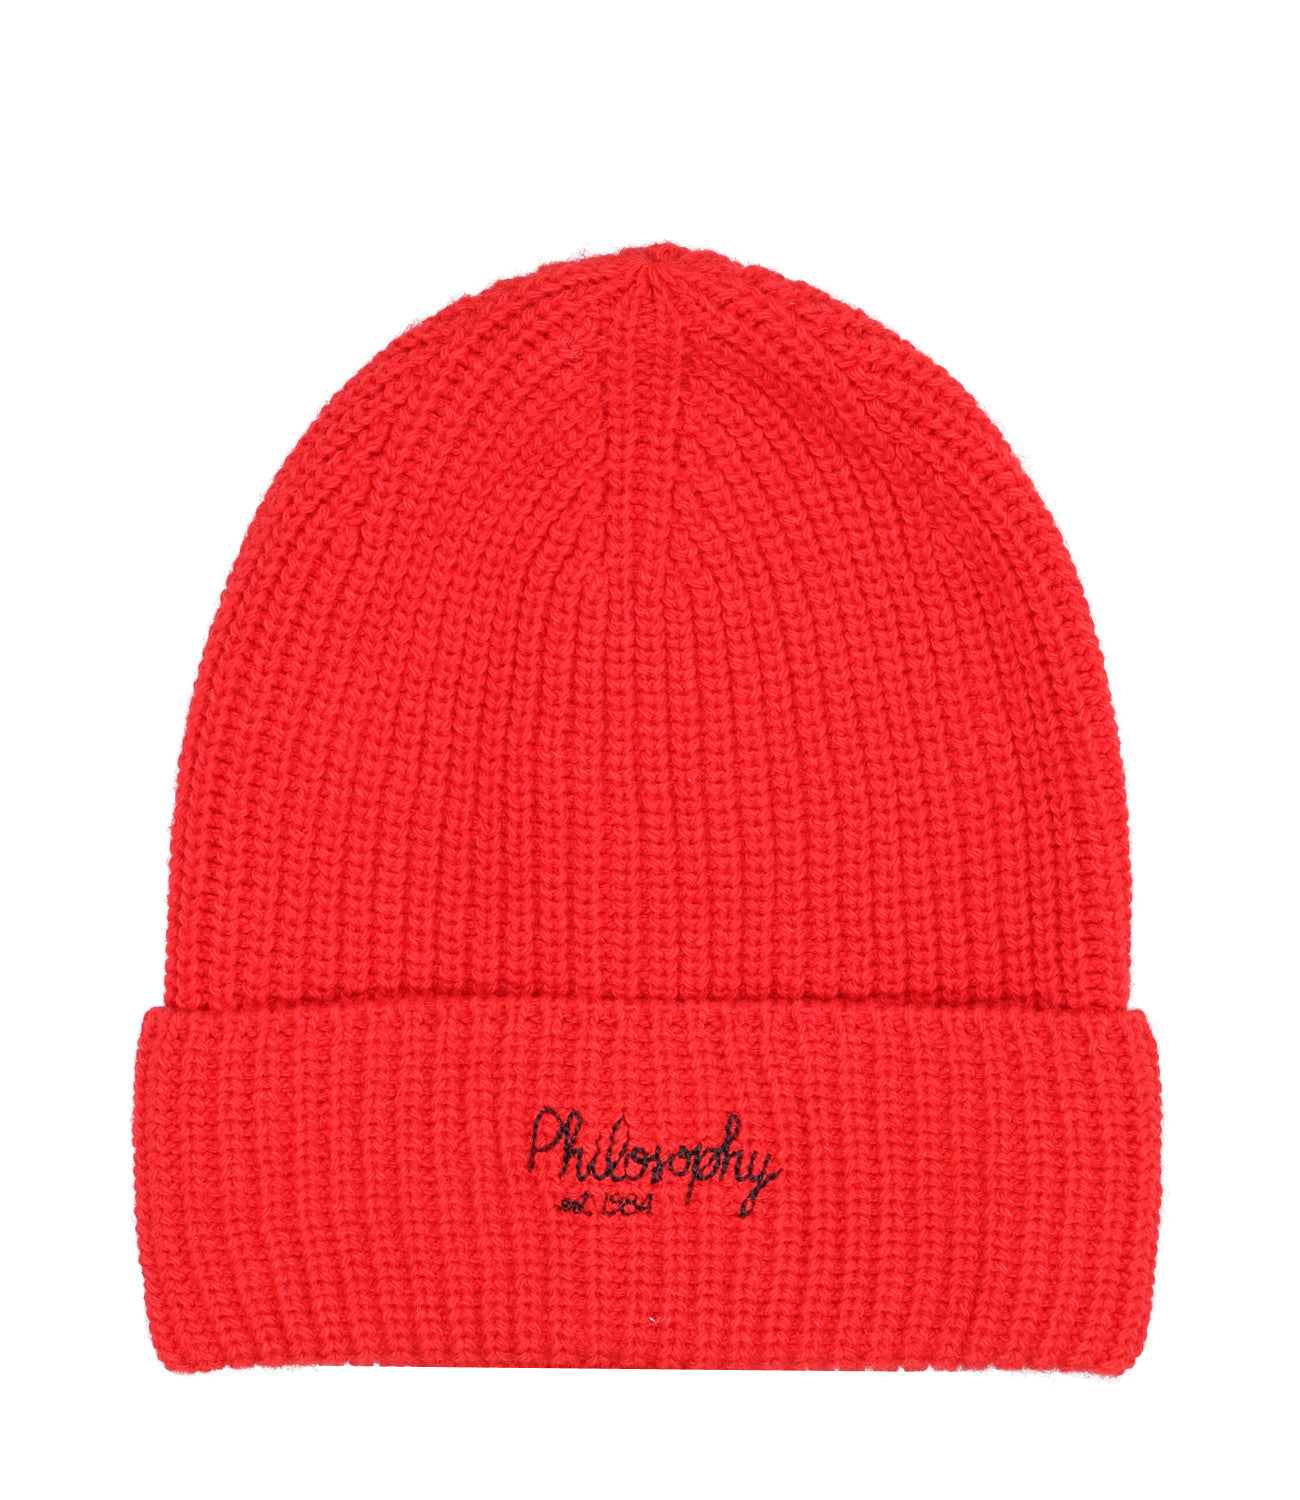 LANVIN Enfant logo-knit beanie hat - Red